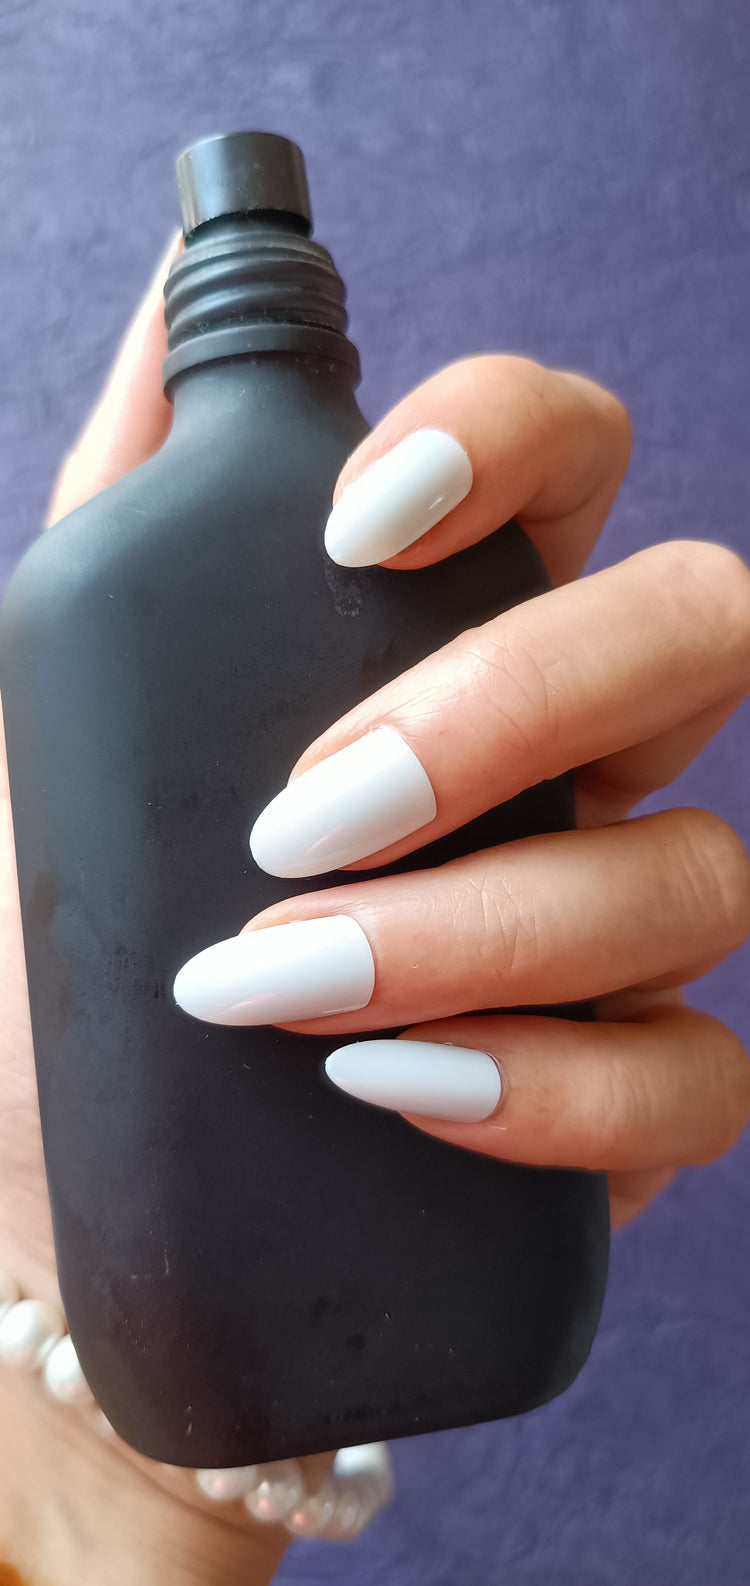 Probio Keratin Revive Shine Serum - 100 ml + Press-On nails Plain White under 50